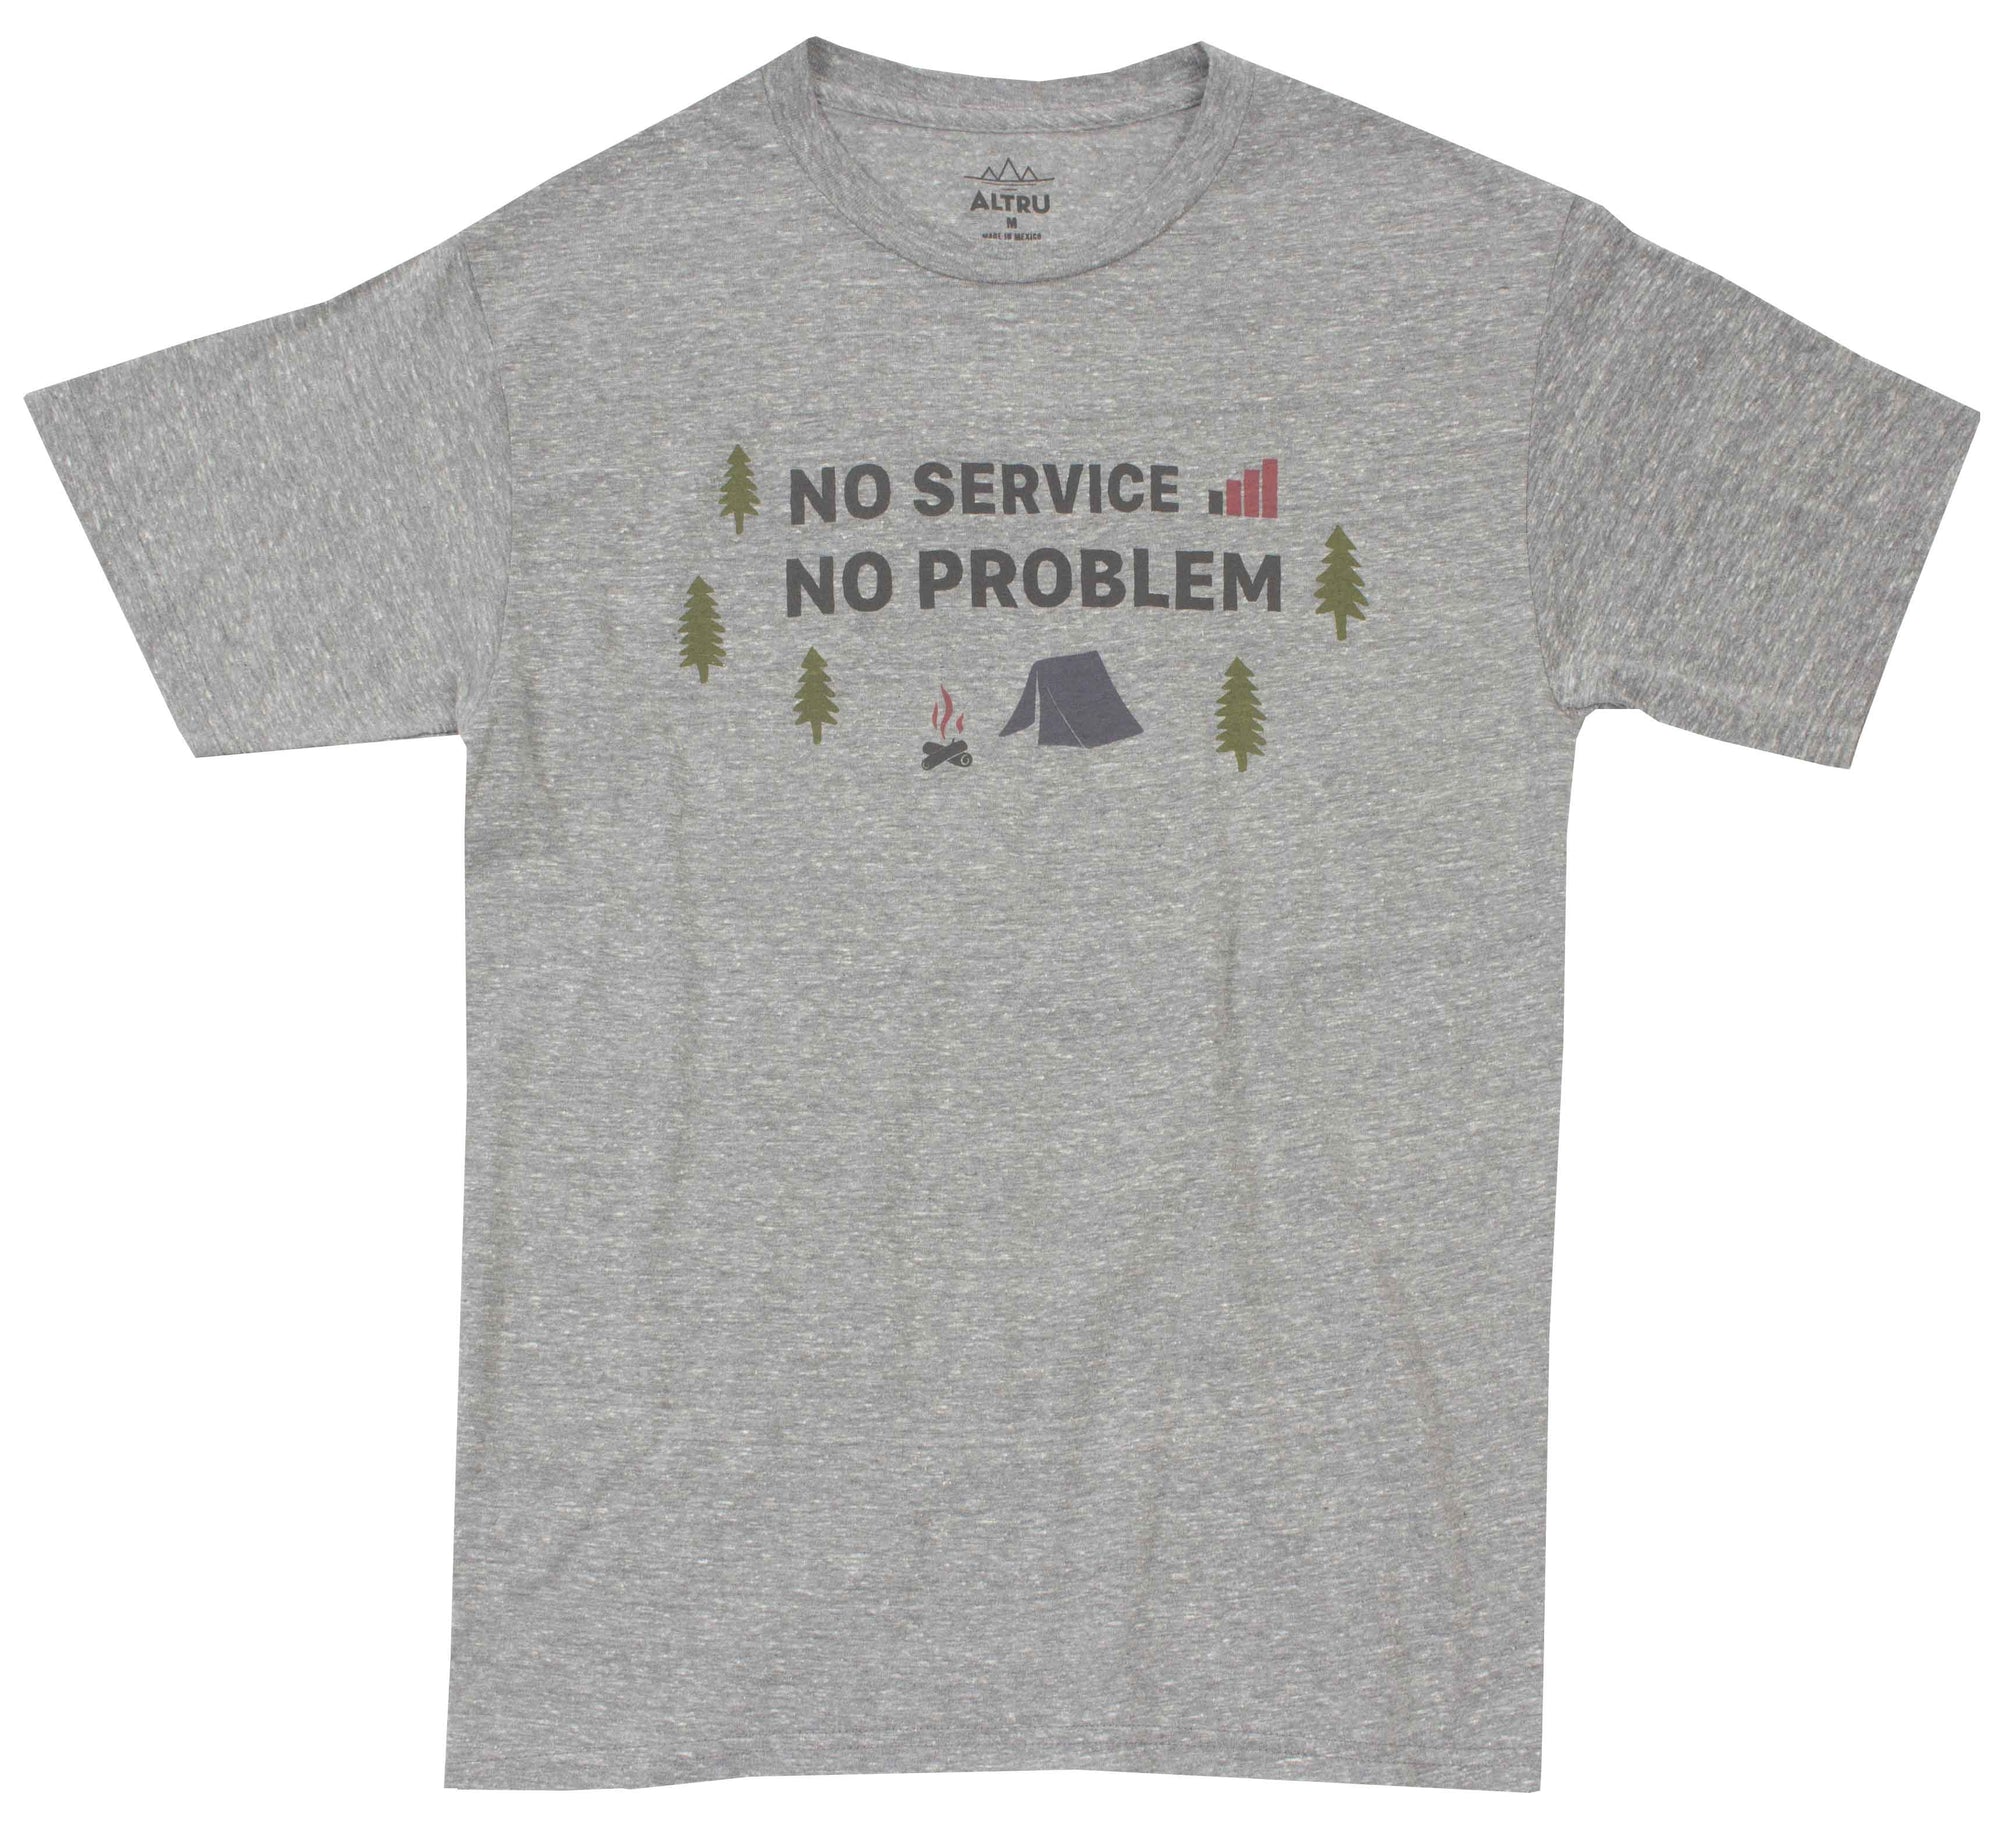 No Service No Problem mens gray graphic tee by Altru Apparel front image